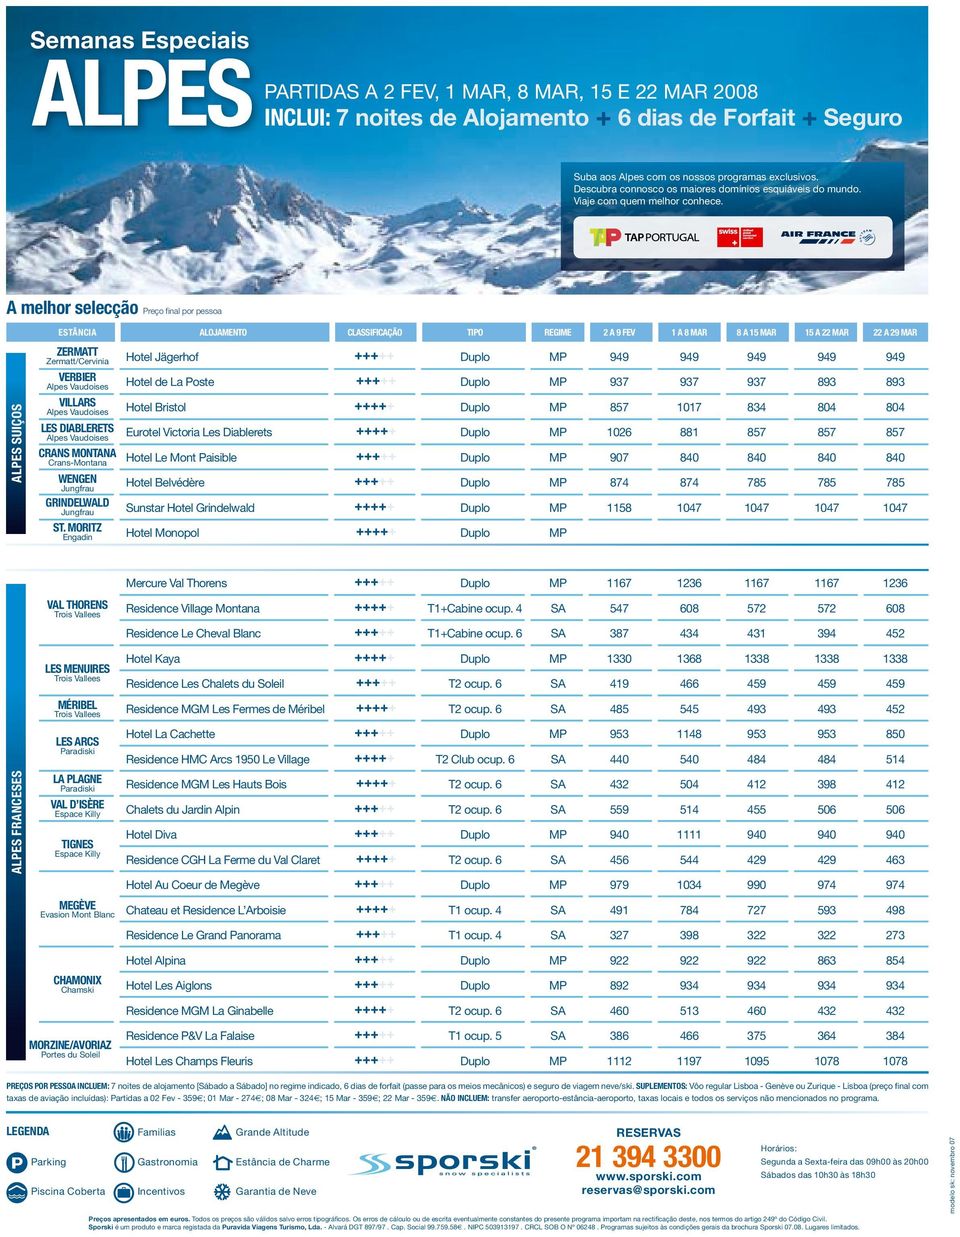 A melhor selecção Preço final por pessoa Alpes Suiços ESTÂNCIA Zermatt Zermatt/Cervinia Verbier Alpes Vaudoises Villars Alpes Vaudoises Les Diablerets Alpes Vaudoises Crans Montana Crans-Montana